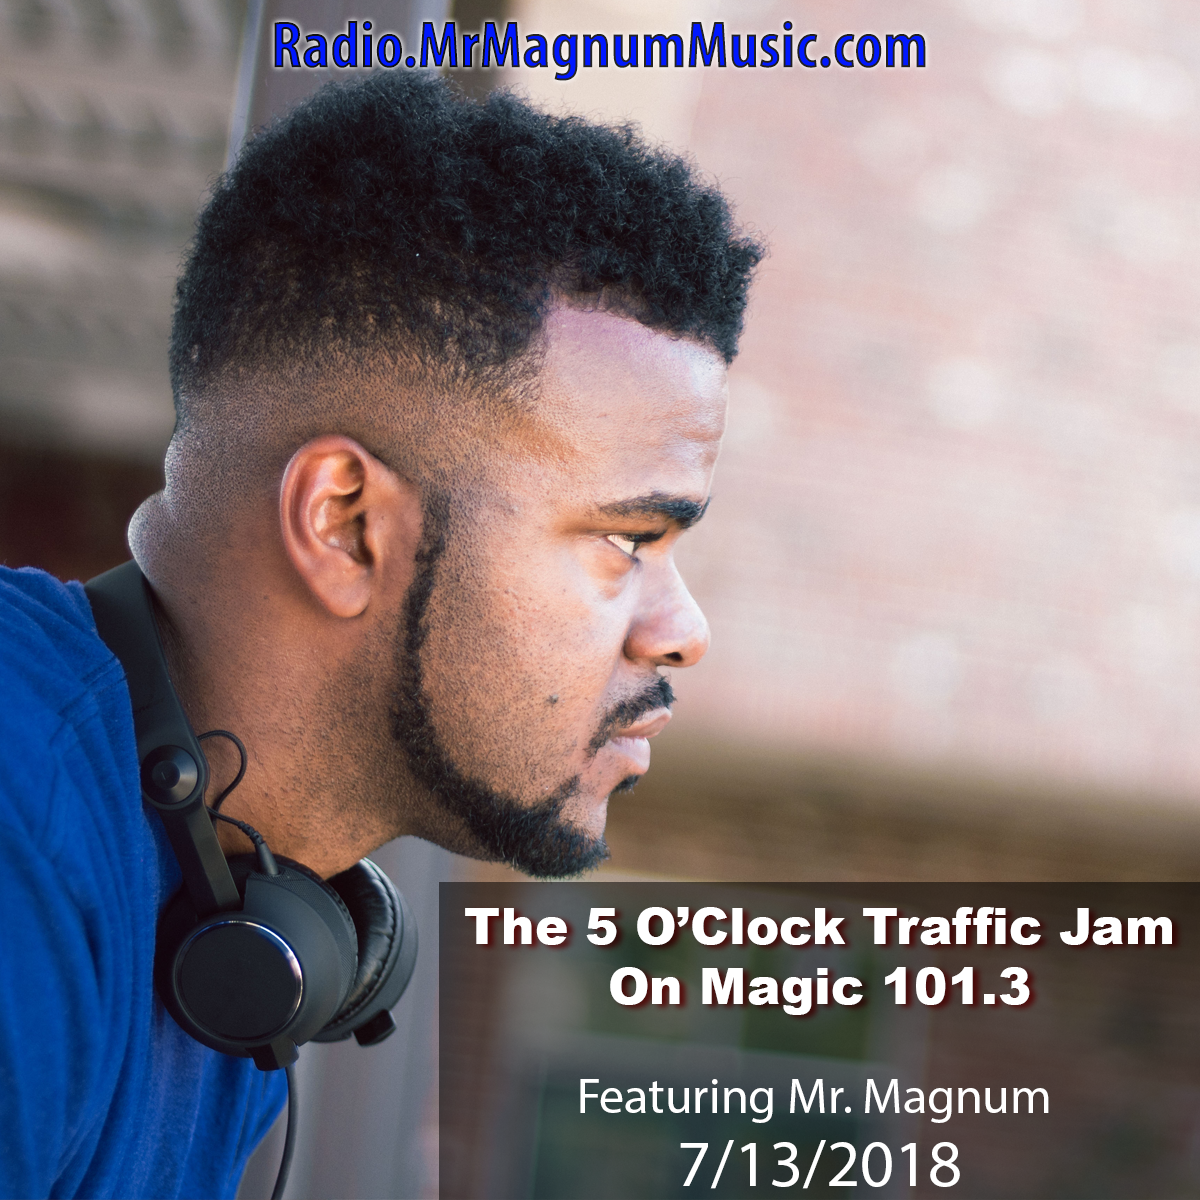 The 5 O'Clock Traffic Jam 20180713 featuring Gainesville's #1 DJ, Mr. Magnum on Magic 101.3